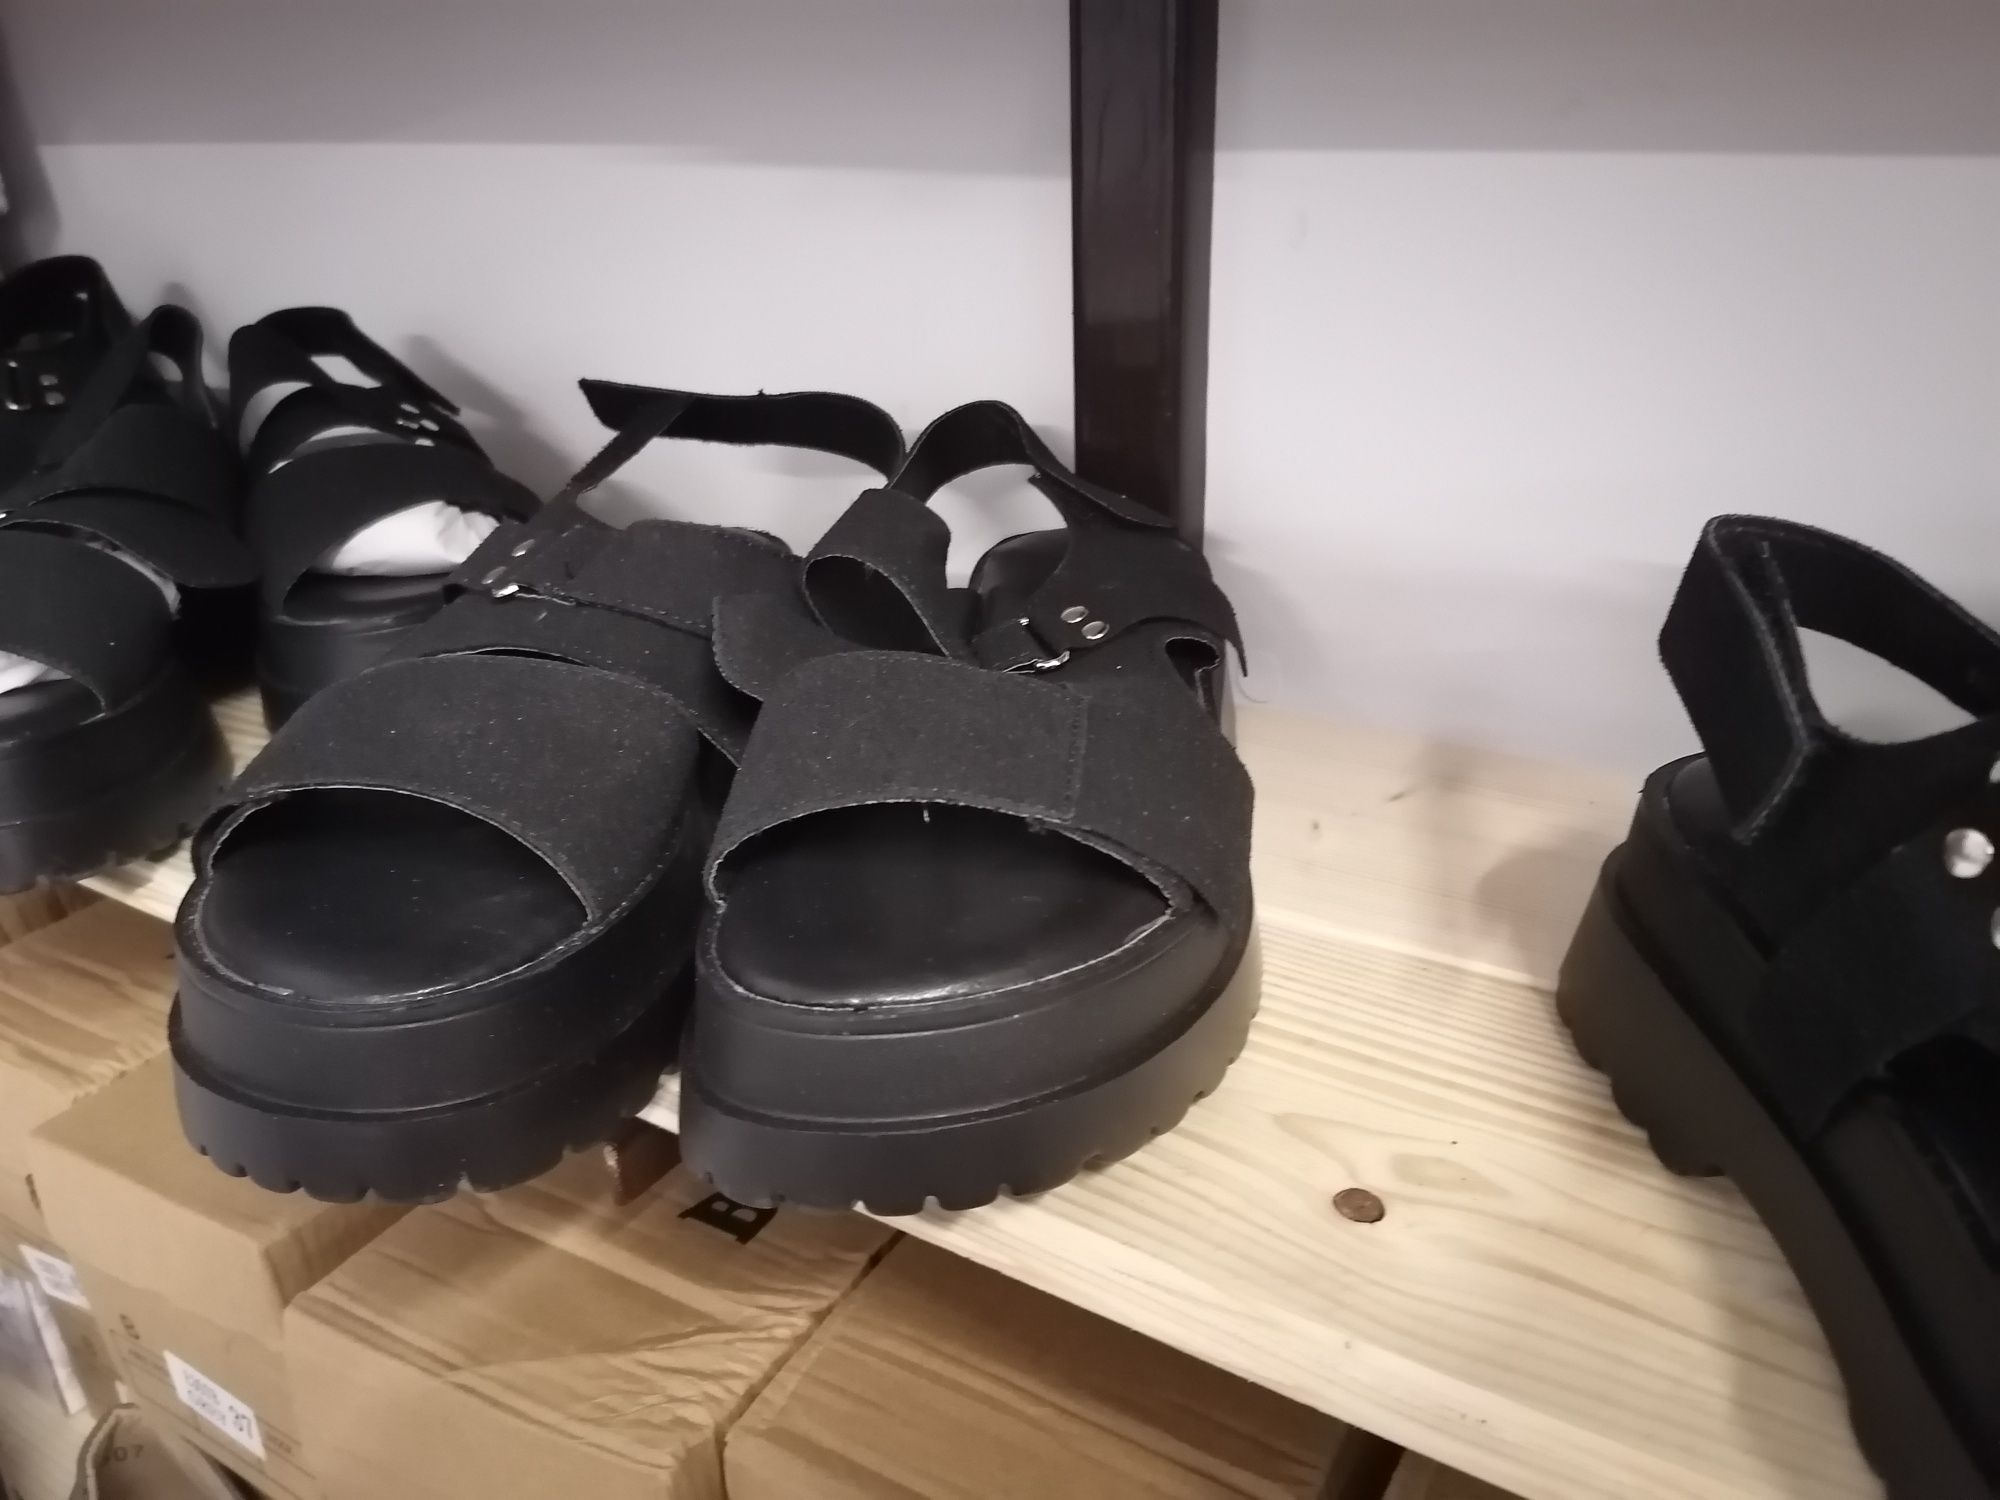 Sandałki damskie czarne